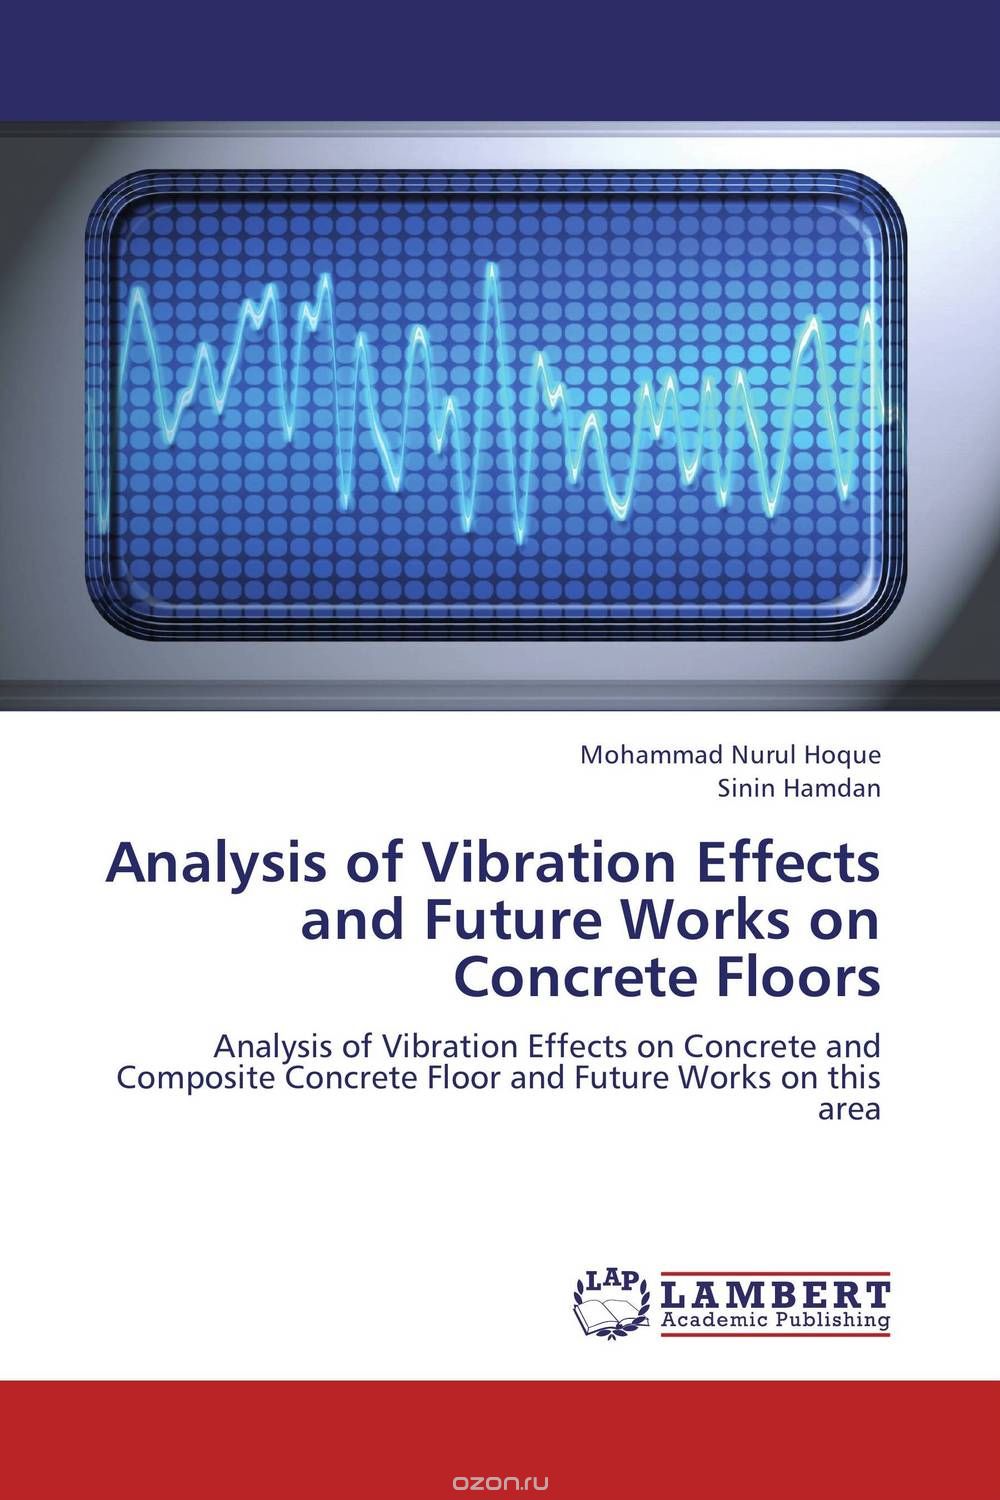 Скачать книгу "Analysis of Vibration Effects and Future Works on Concrete Floors"